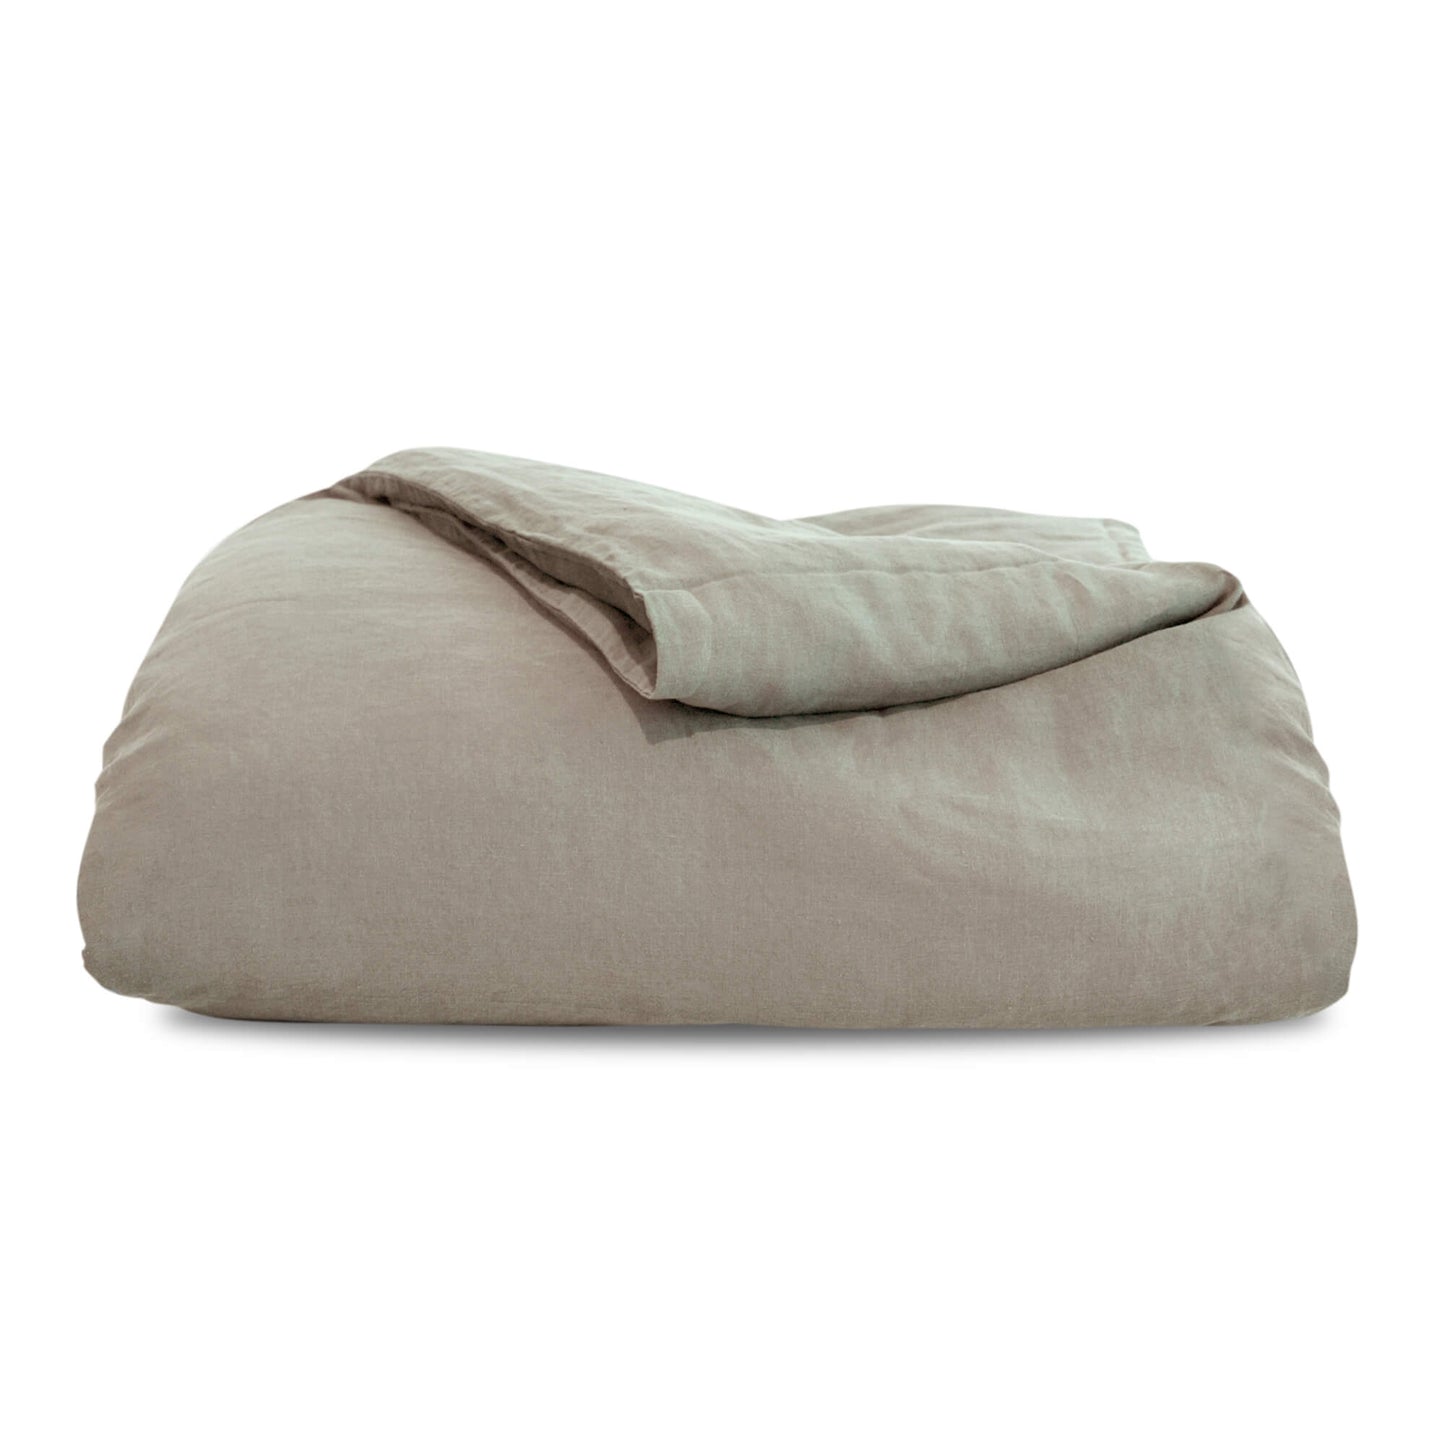 Delilah Home 100% Hemp Duvet Covers
Jungle Pillows